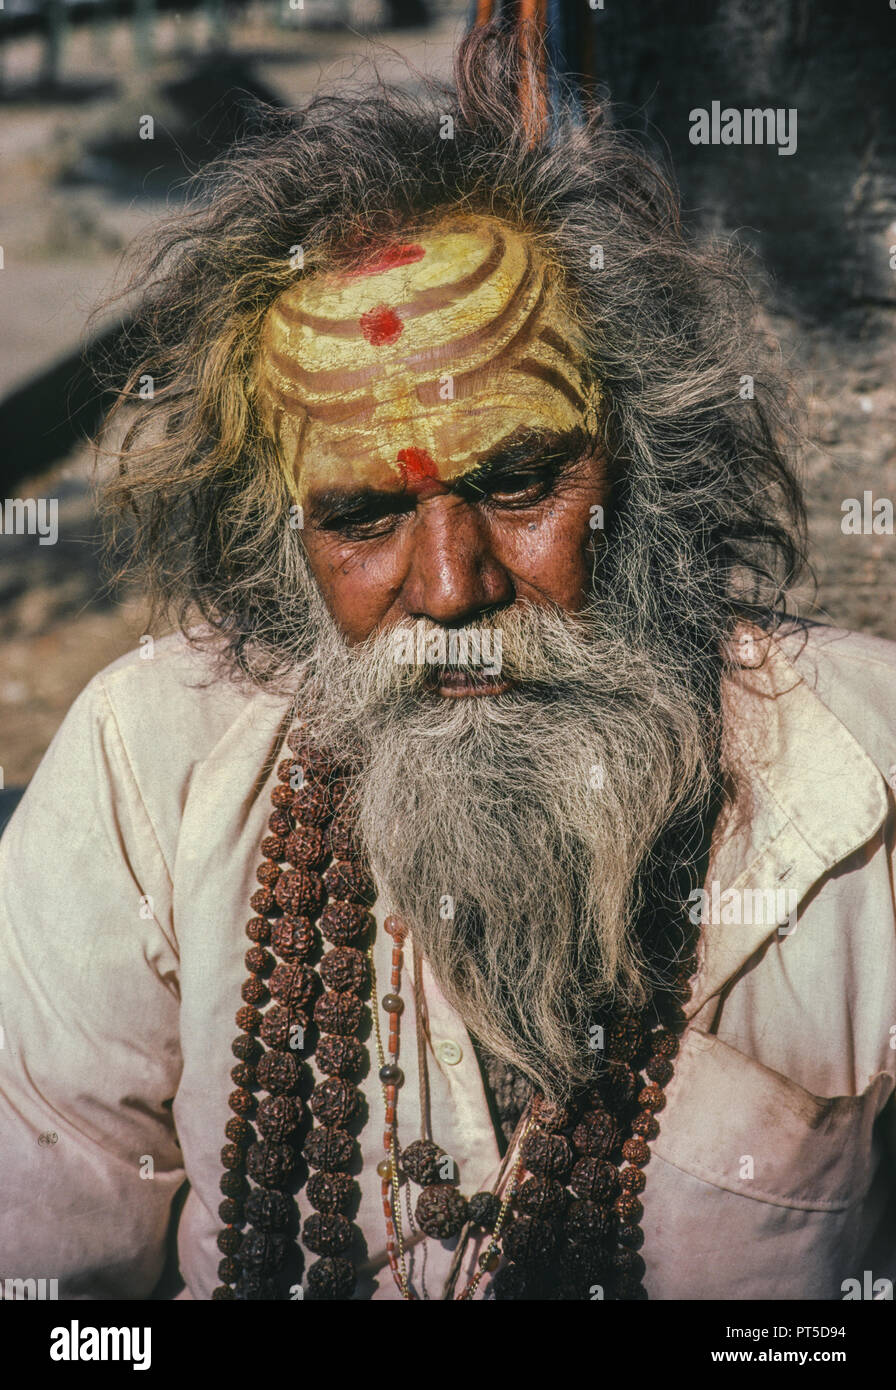 Hindu Guru bei bagnati Fluss, Nepal. Analoge Fotografie Stockfoto